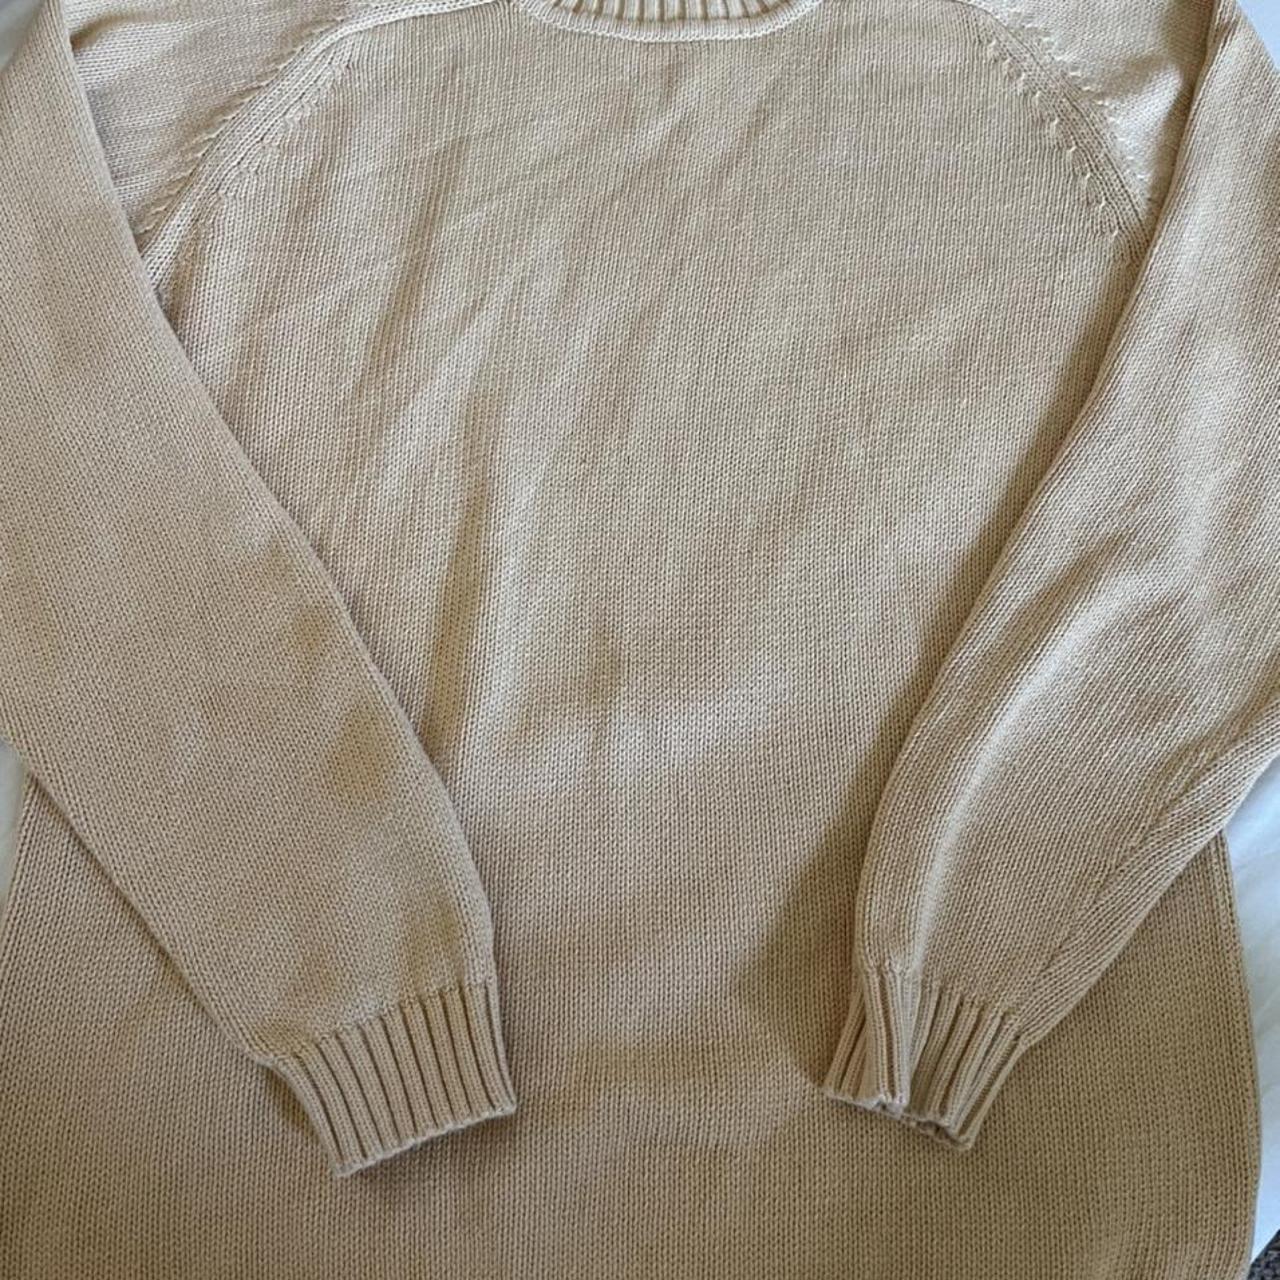 Thick St. John’s Bay cream colored sweater - Depop